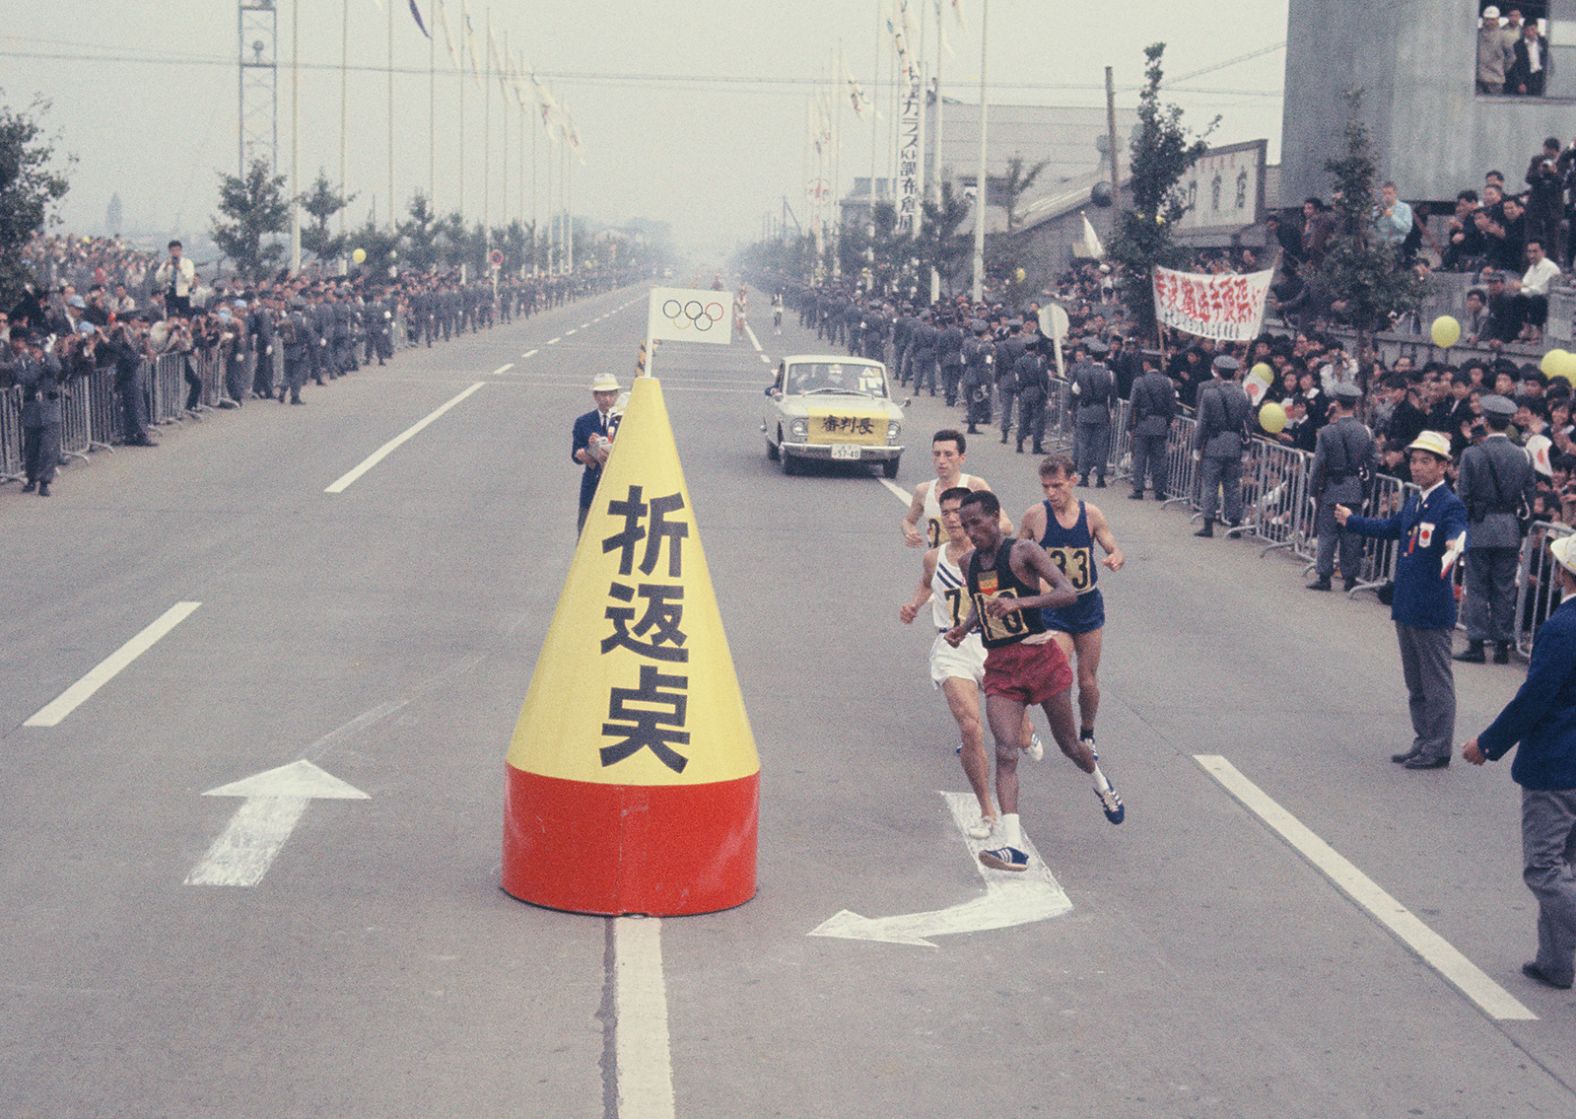 Runners reach the turn-around point of the marathon event.